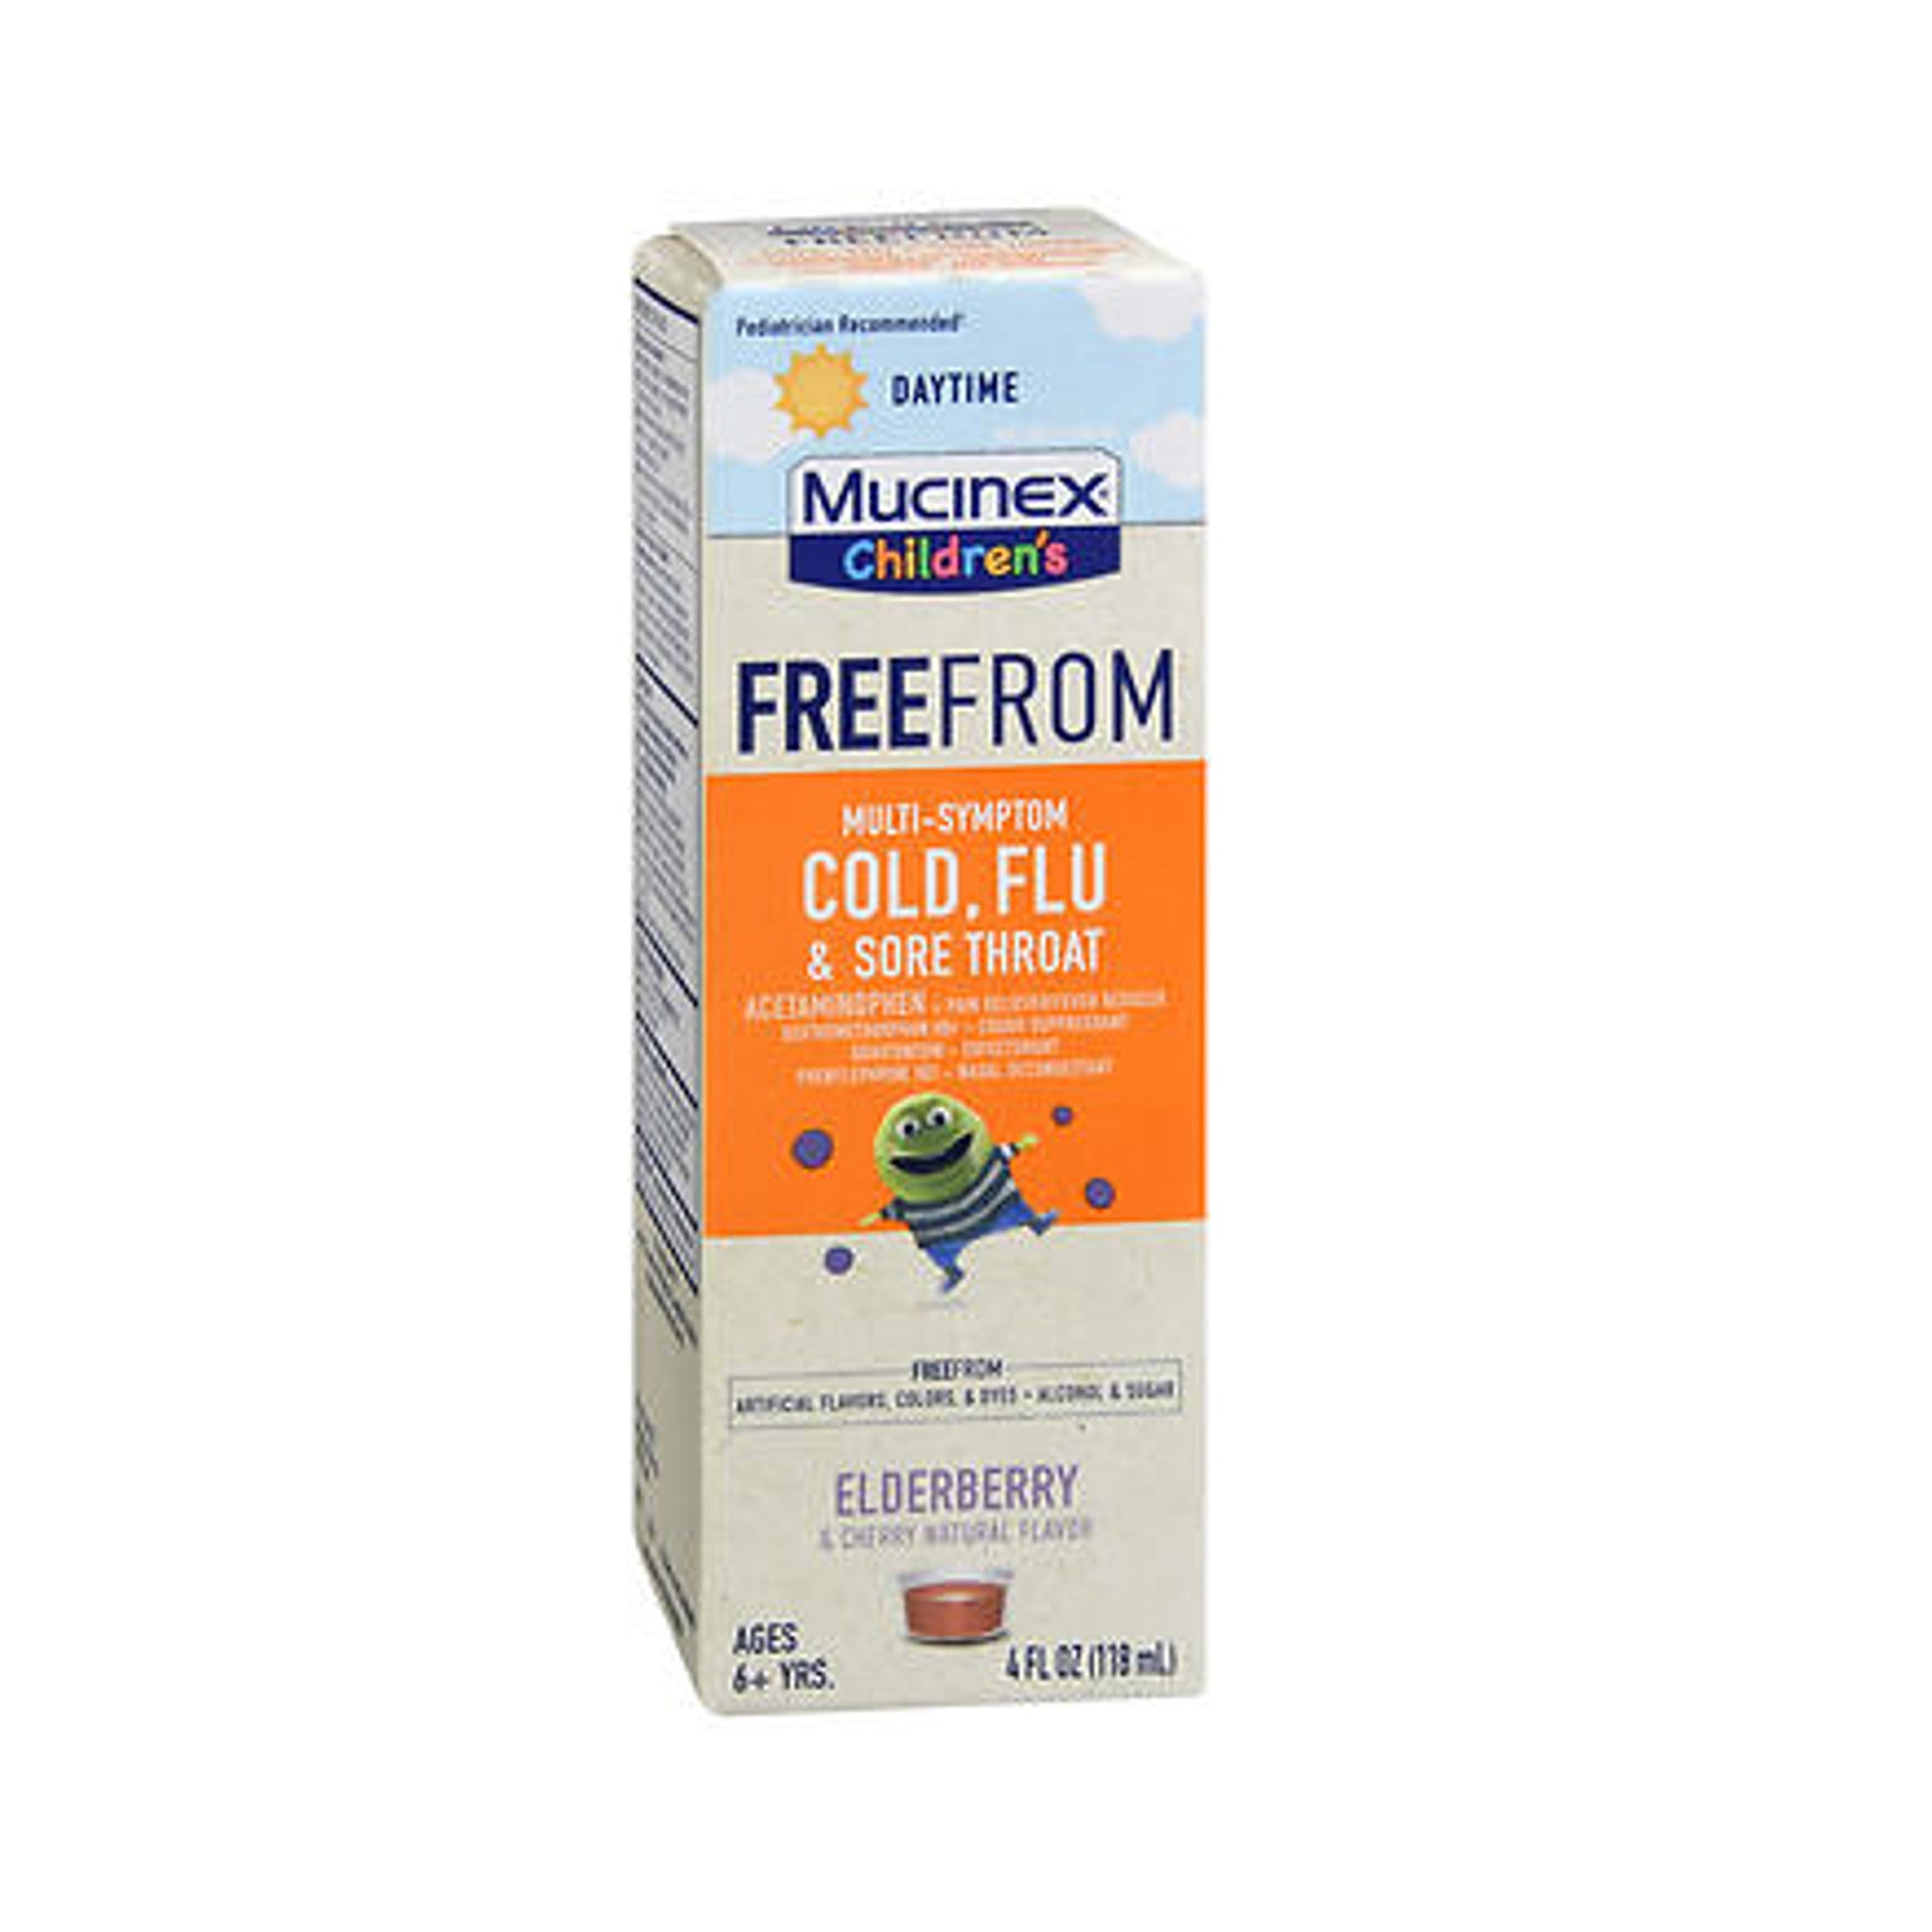 Mucinex Children's Free From Multi-Symptom Cold, Flu & Sore Throat Daytime Elderberry & Cherry Natural Flavor 4 oz